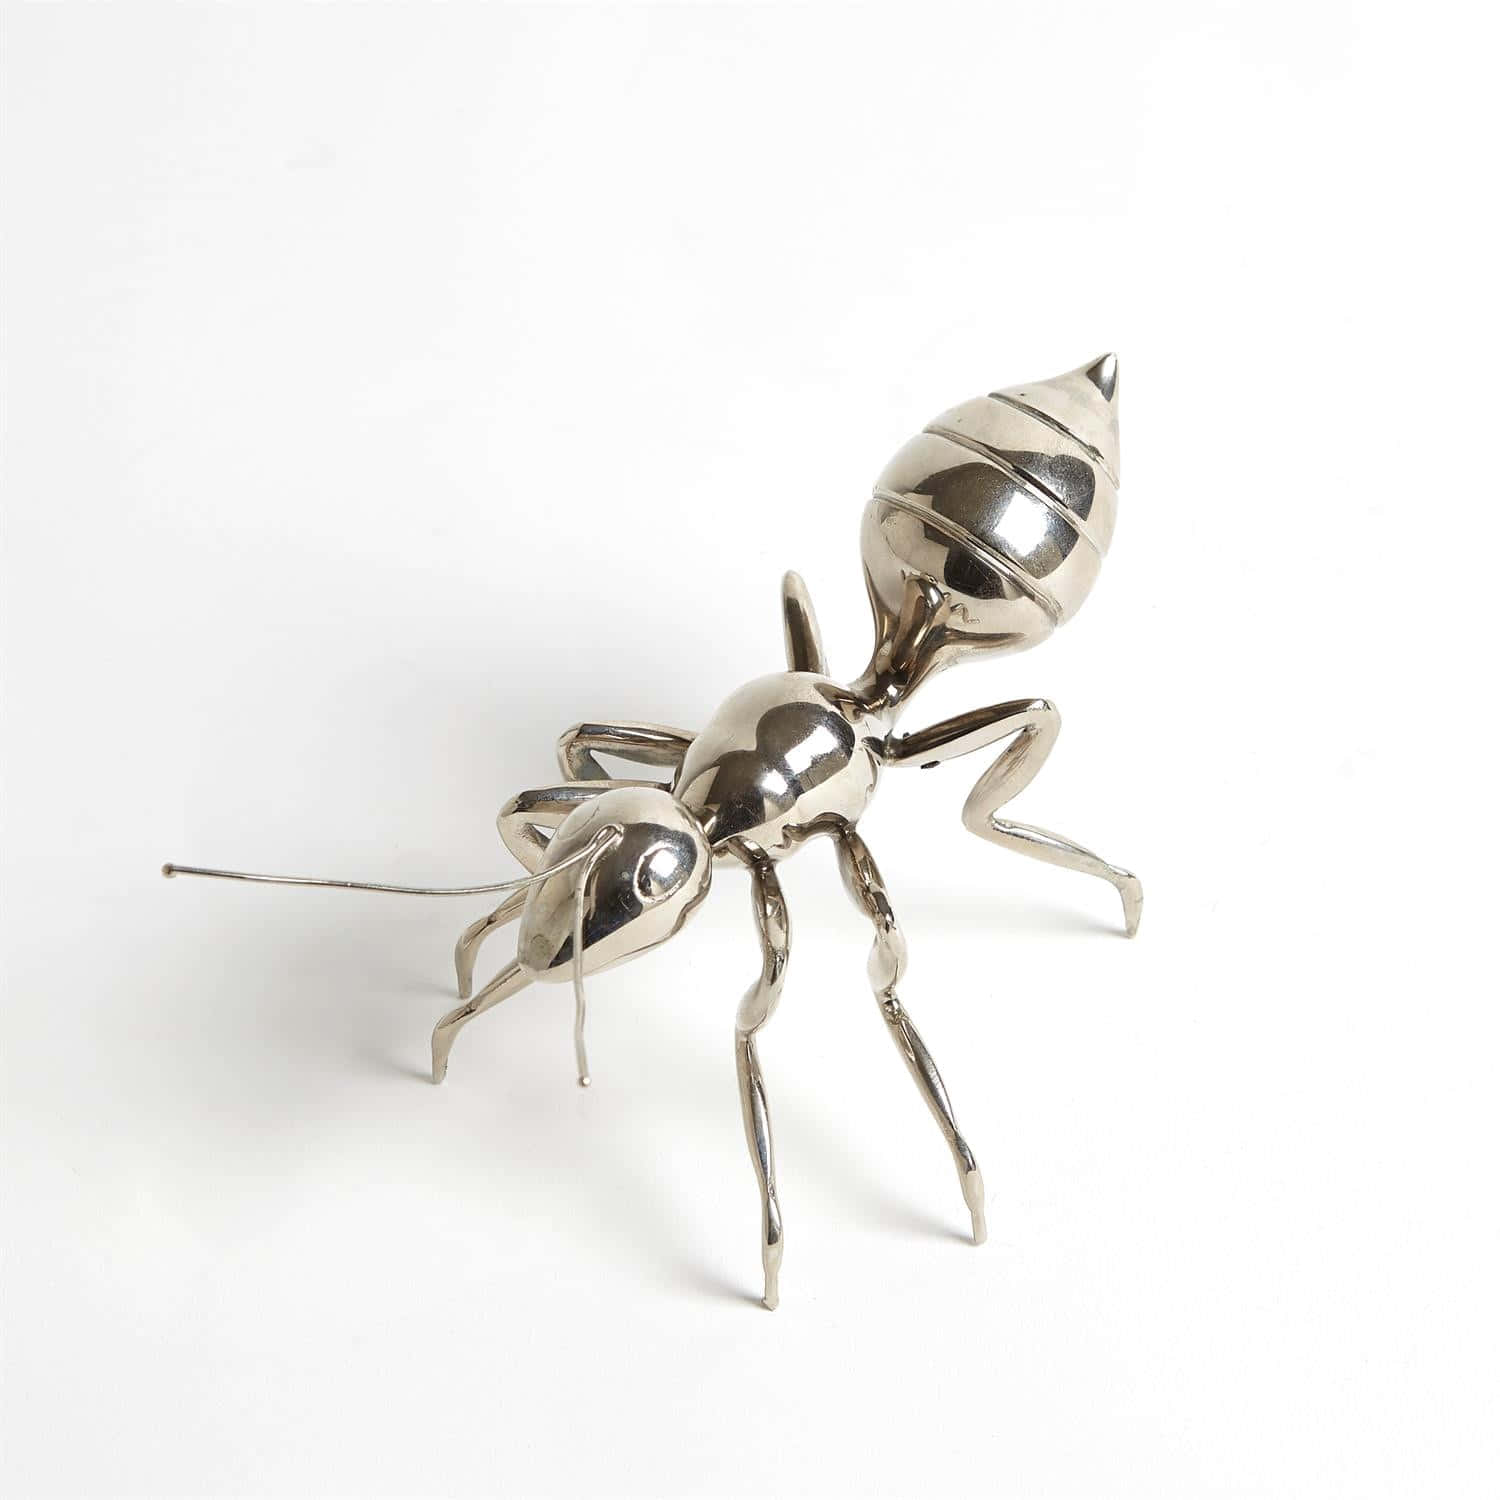 Metallic Art Ant Sculpture Wallpaper